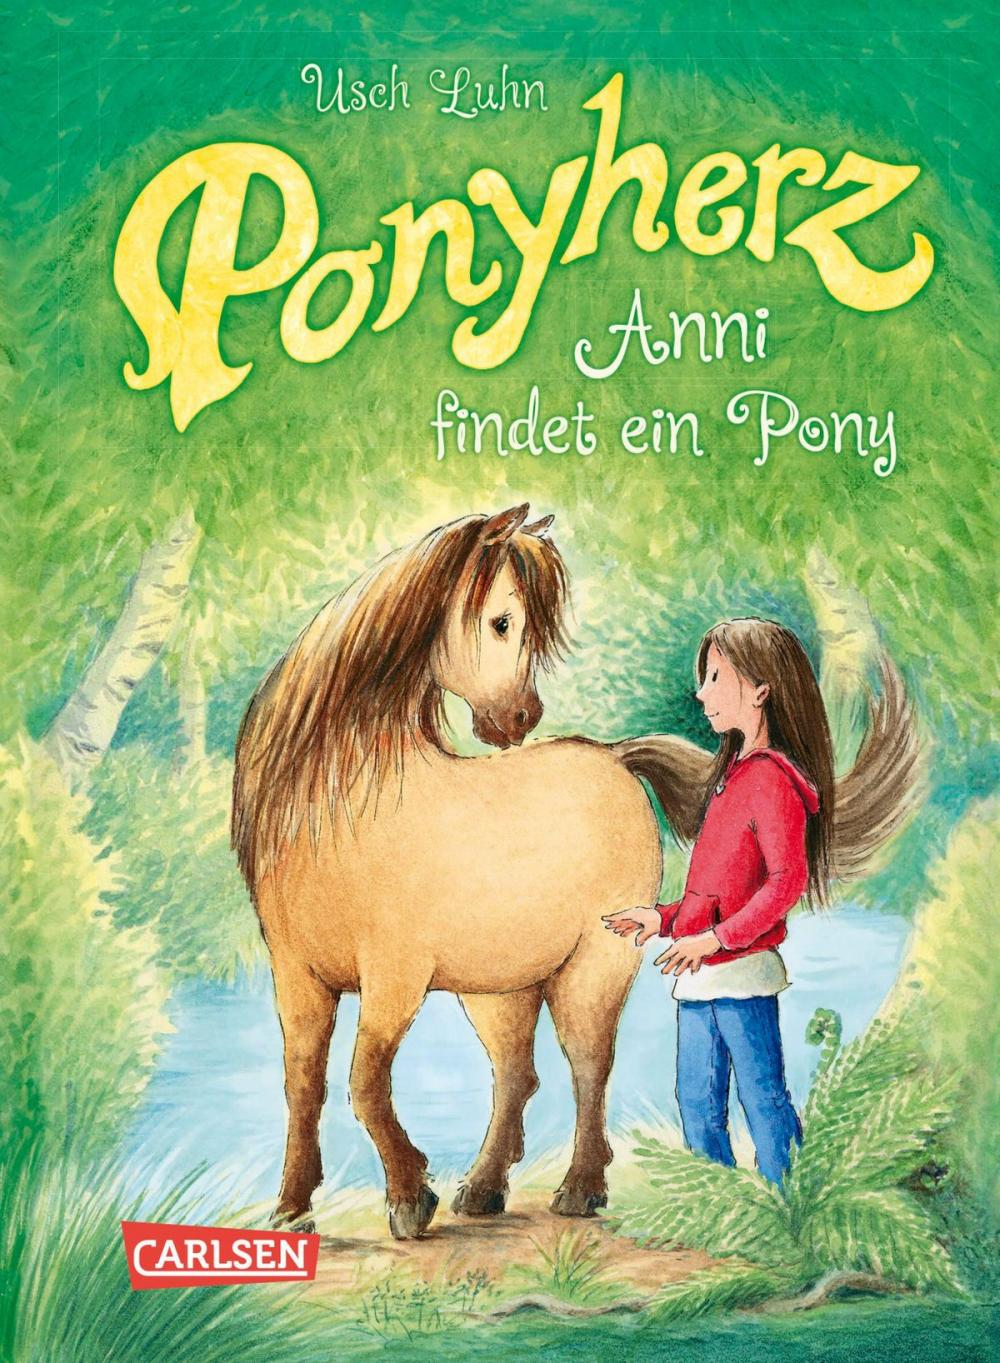 Big bigCover of Ponyherz 1: Anni findet ein Pony